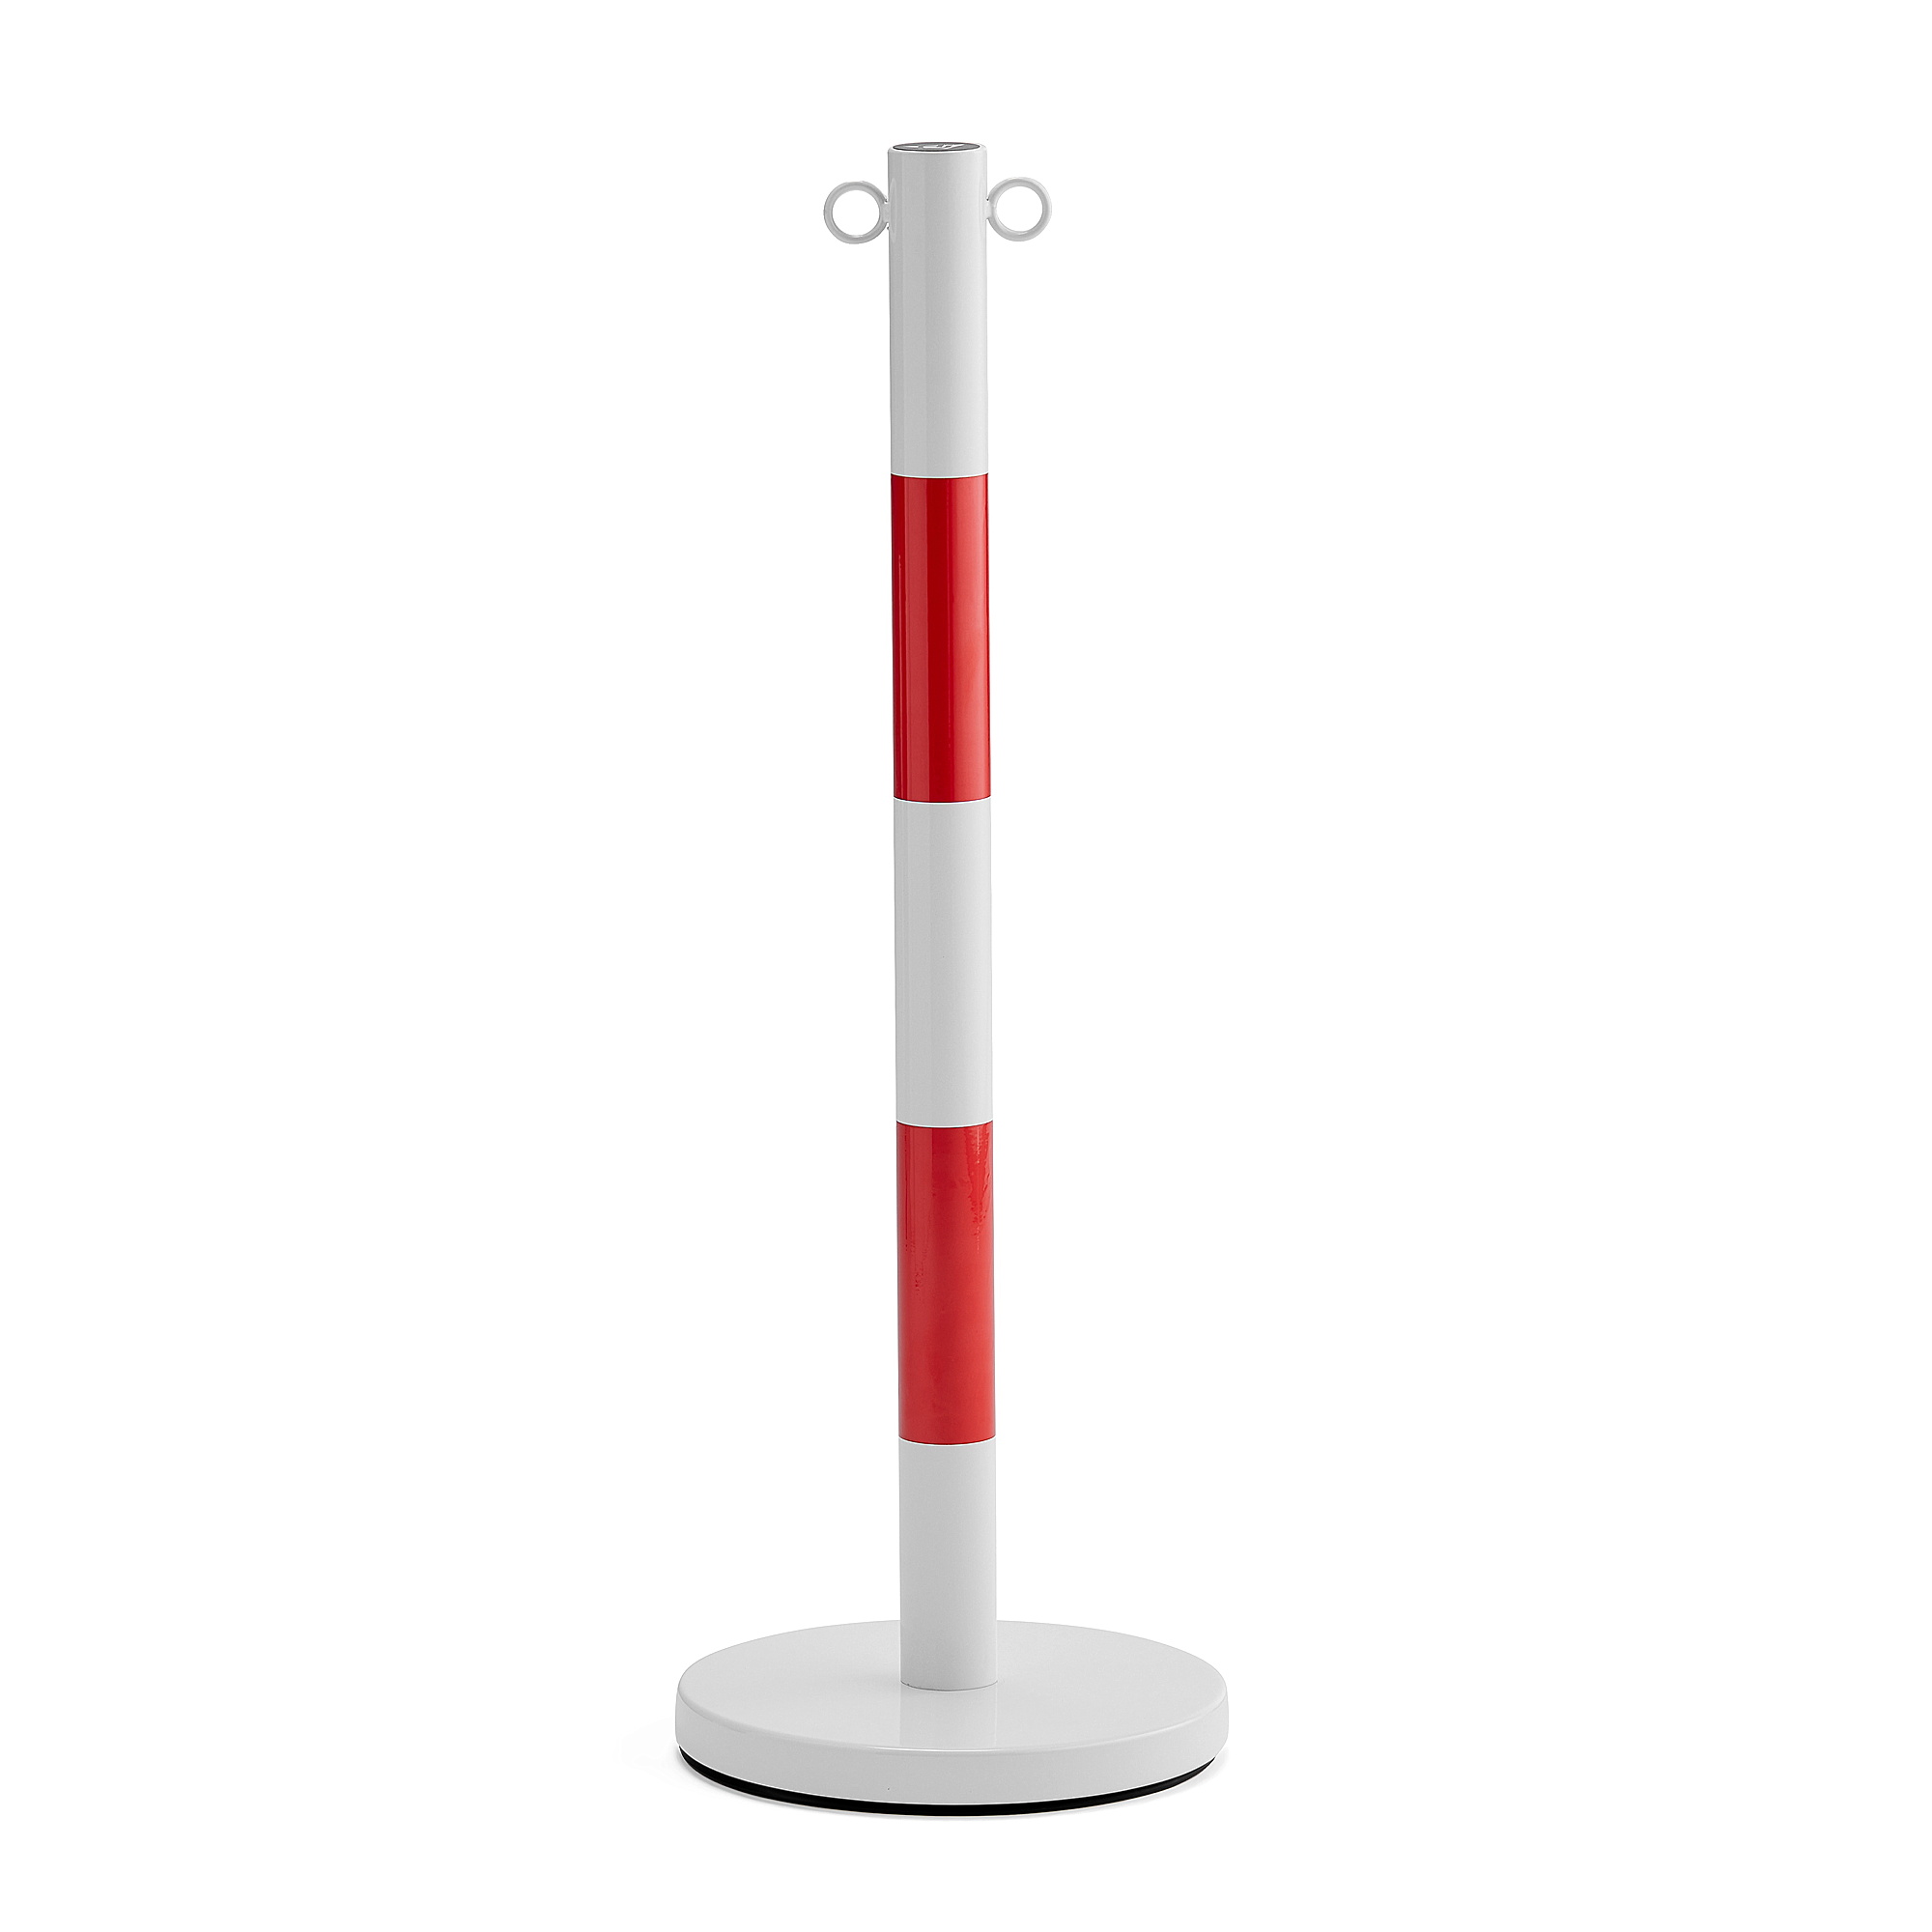 E-shop Kovový zahradzovací stĺpik, 1000 mm, bielo-červený